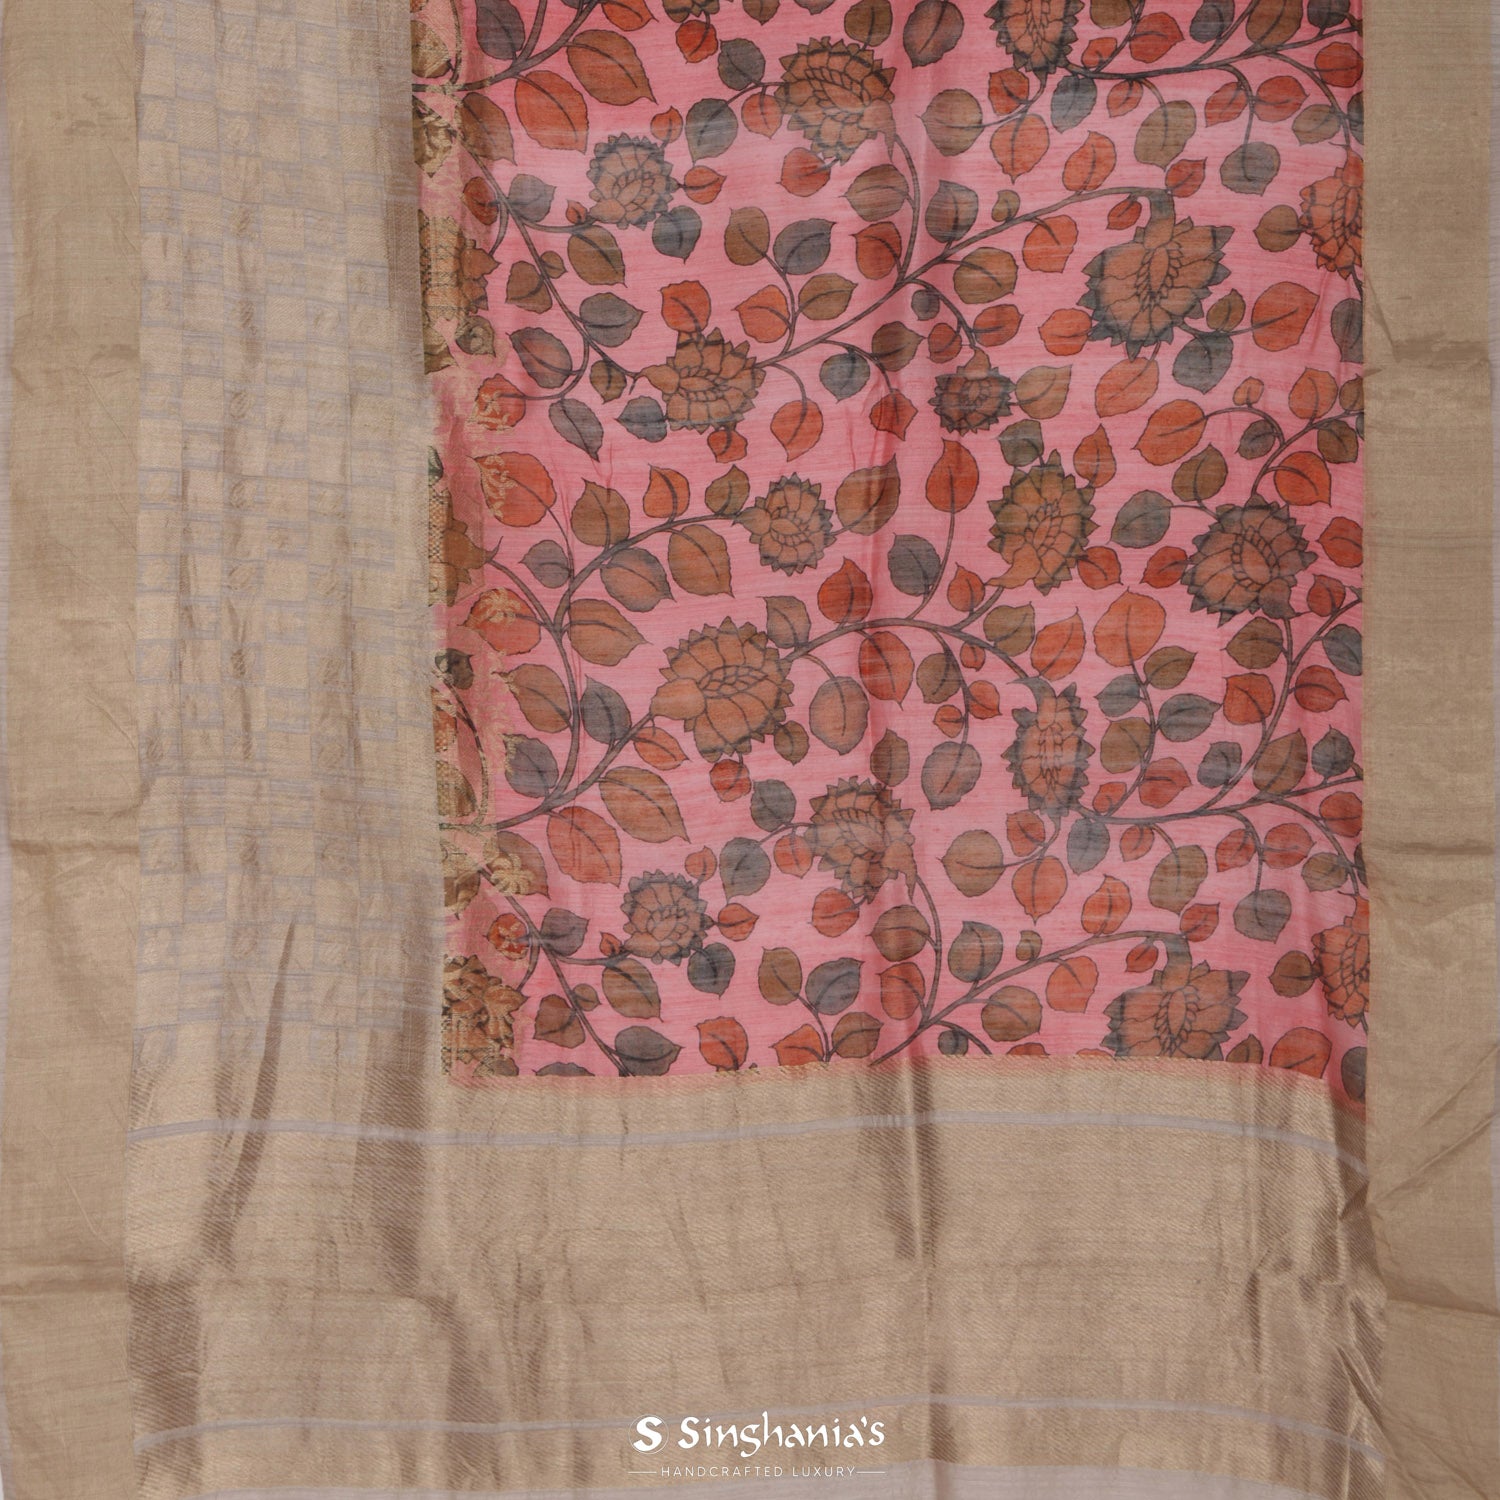 Light Pink Matka Silk Saree With Printed Floral Pattern Has Big Border